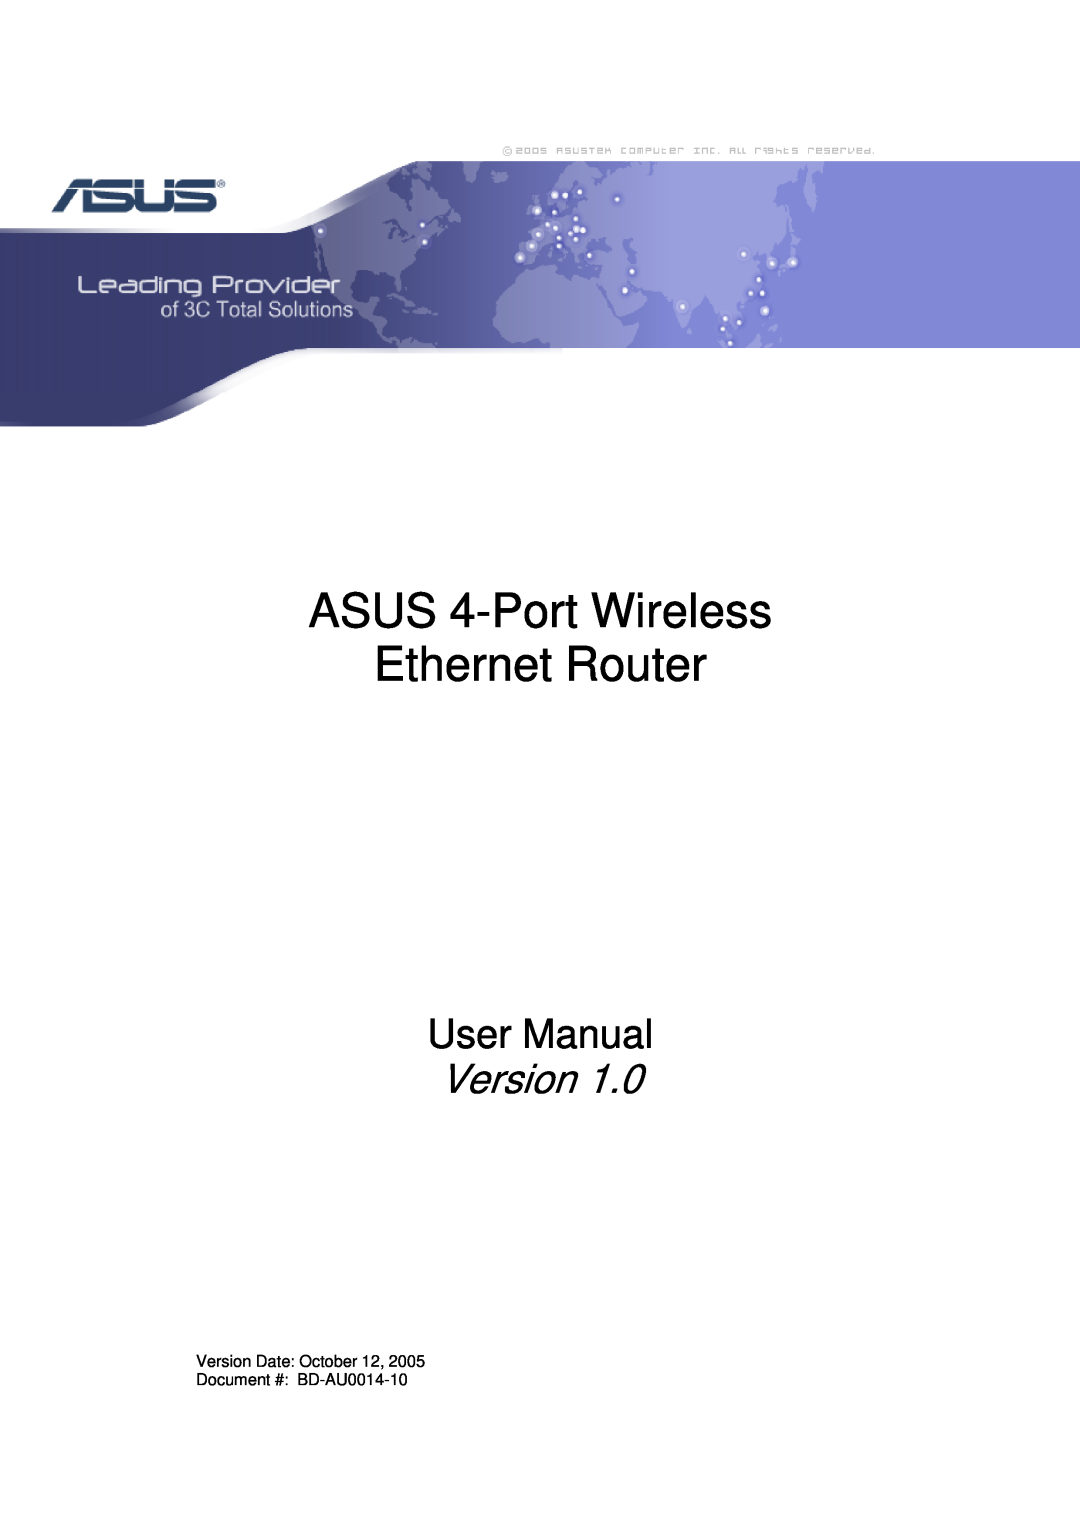 Asus BD-AU0014-10 user manual ASUS 4-Port Wireless Ethernet Router, User Manual, Version 